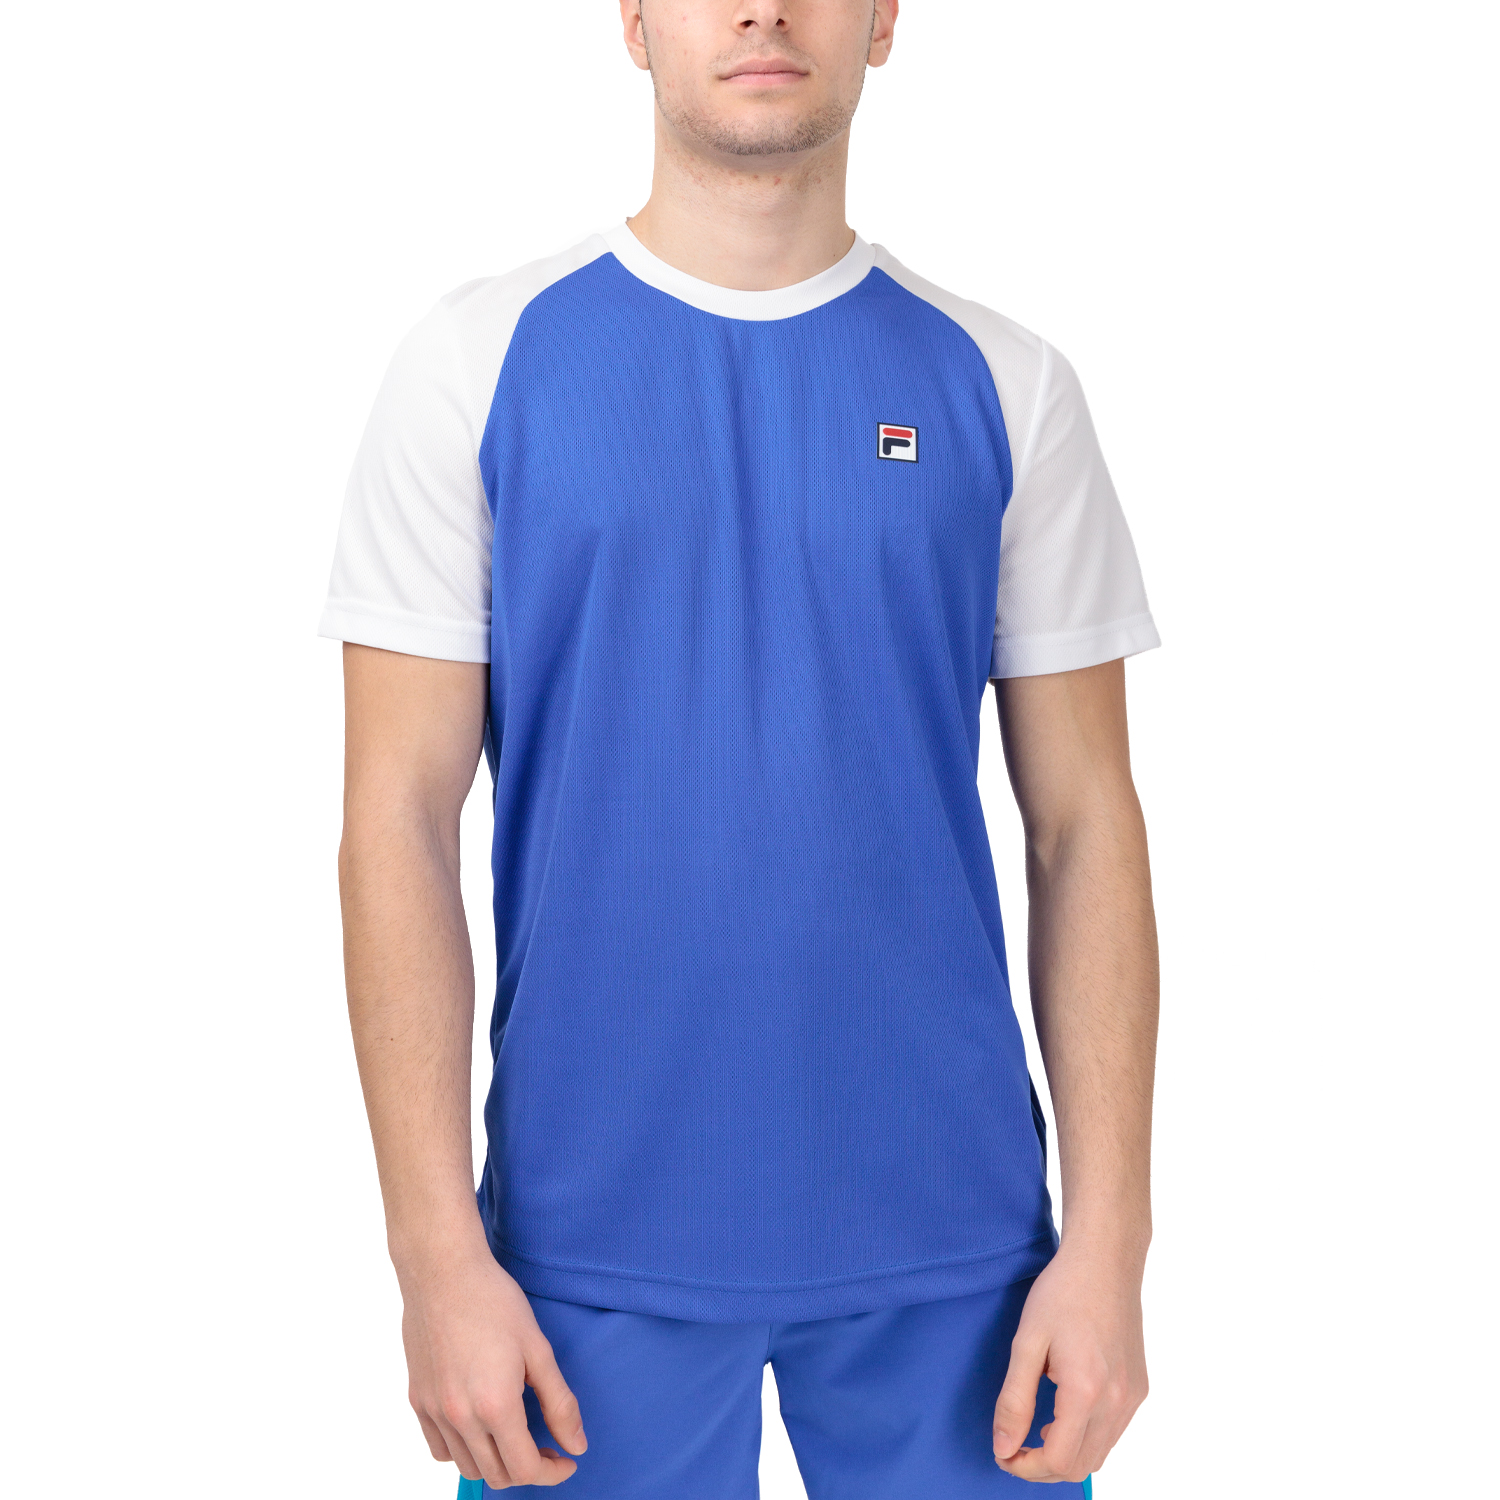 Fila Ray T-Shirt - Dazzling Blue